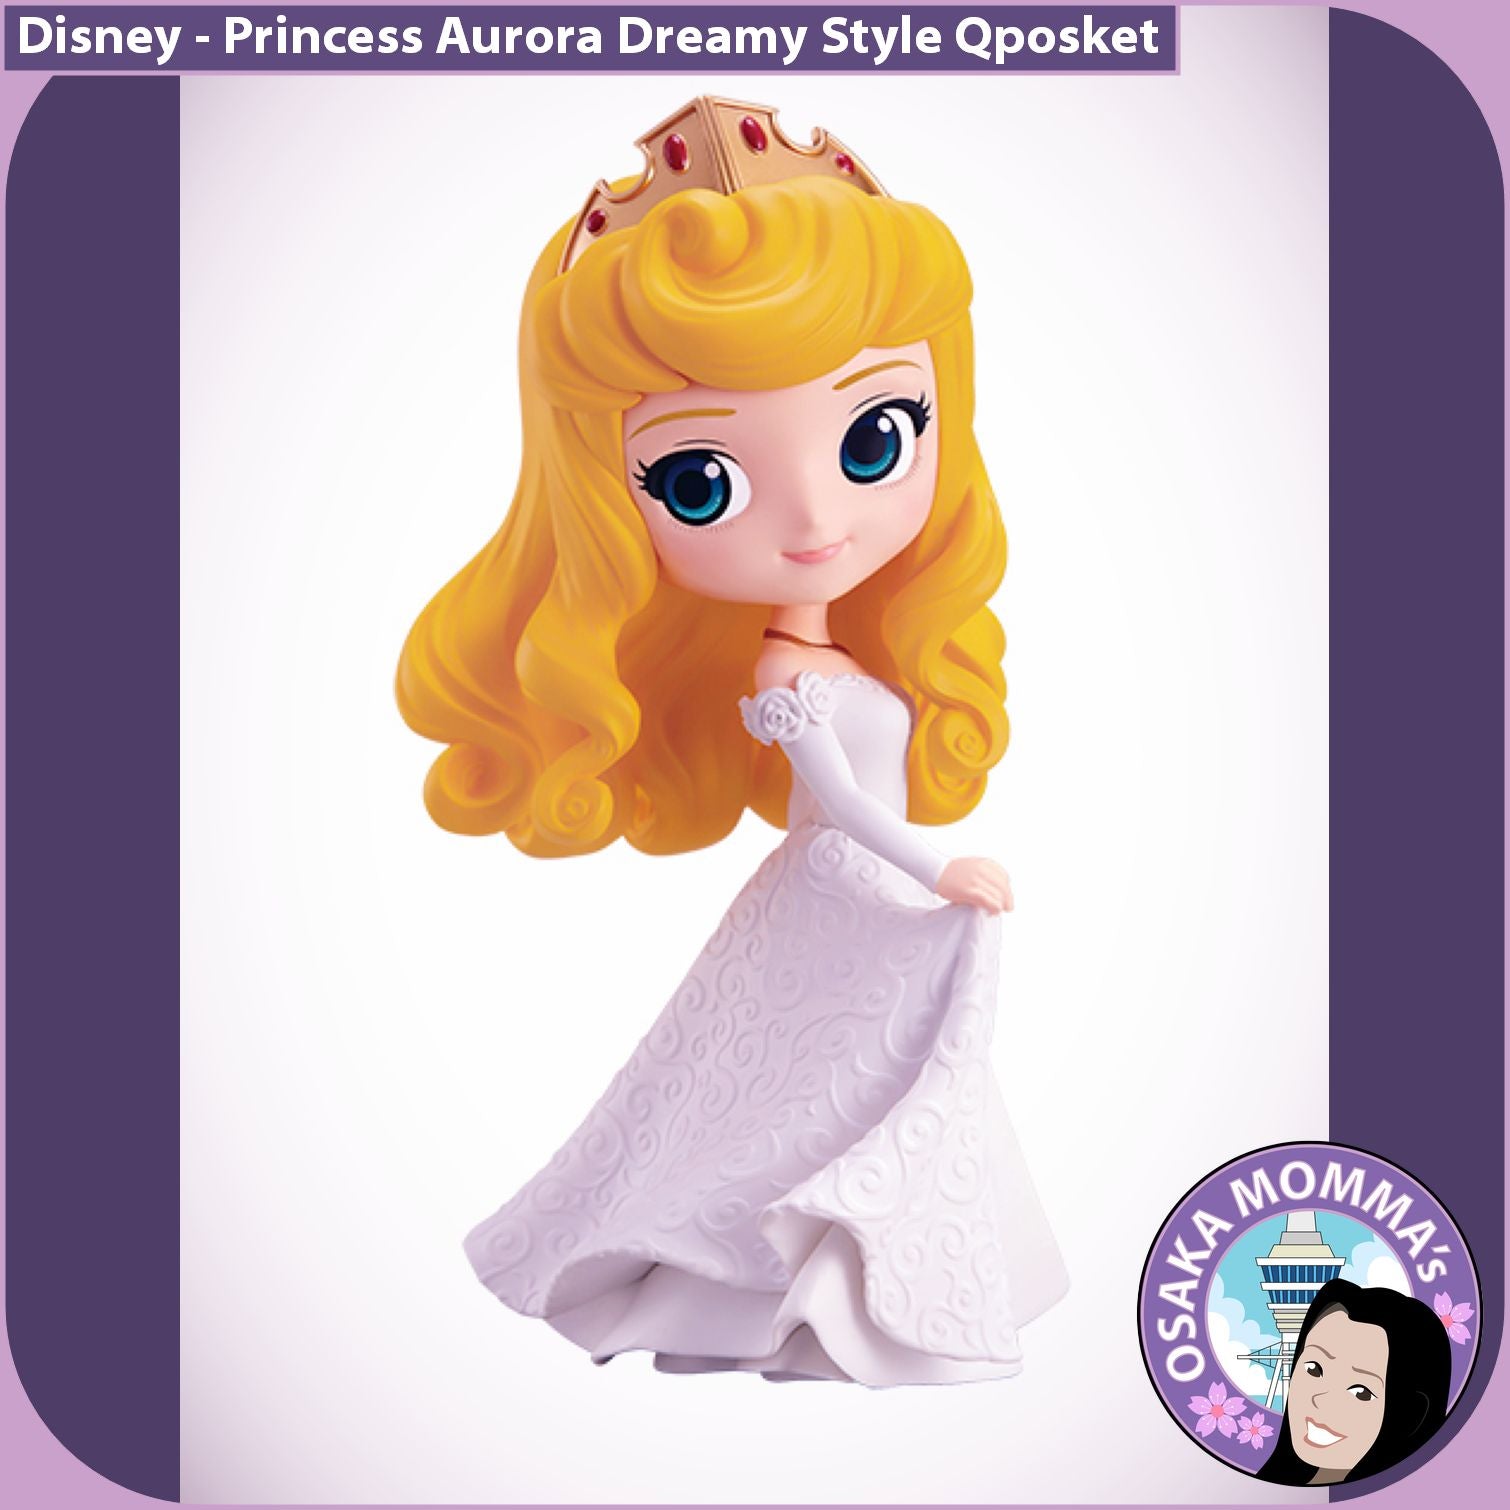 Princess Aurora Dreamy Style Qposket